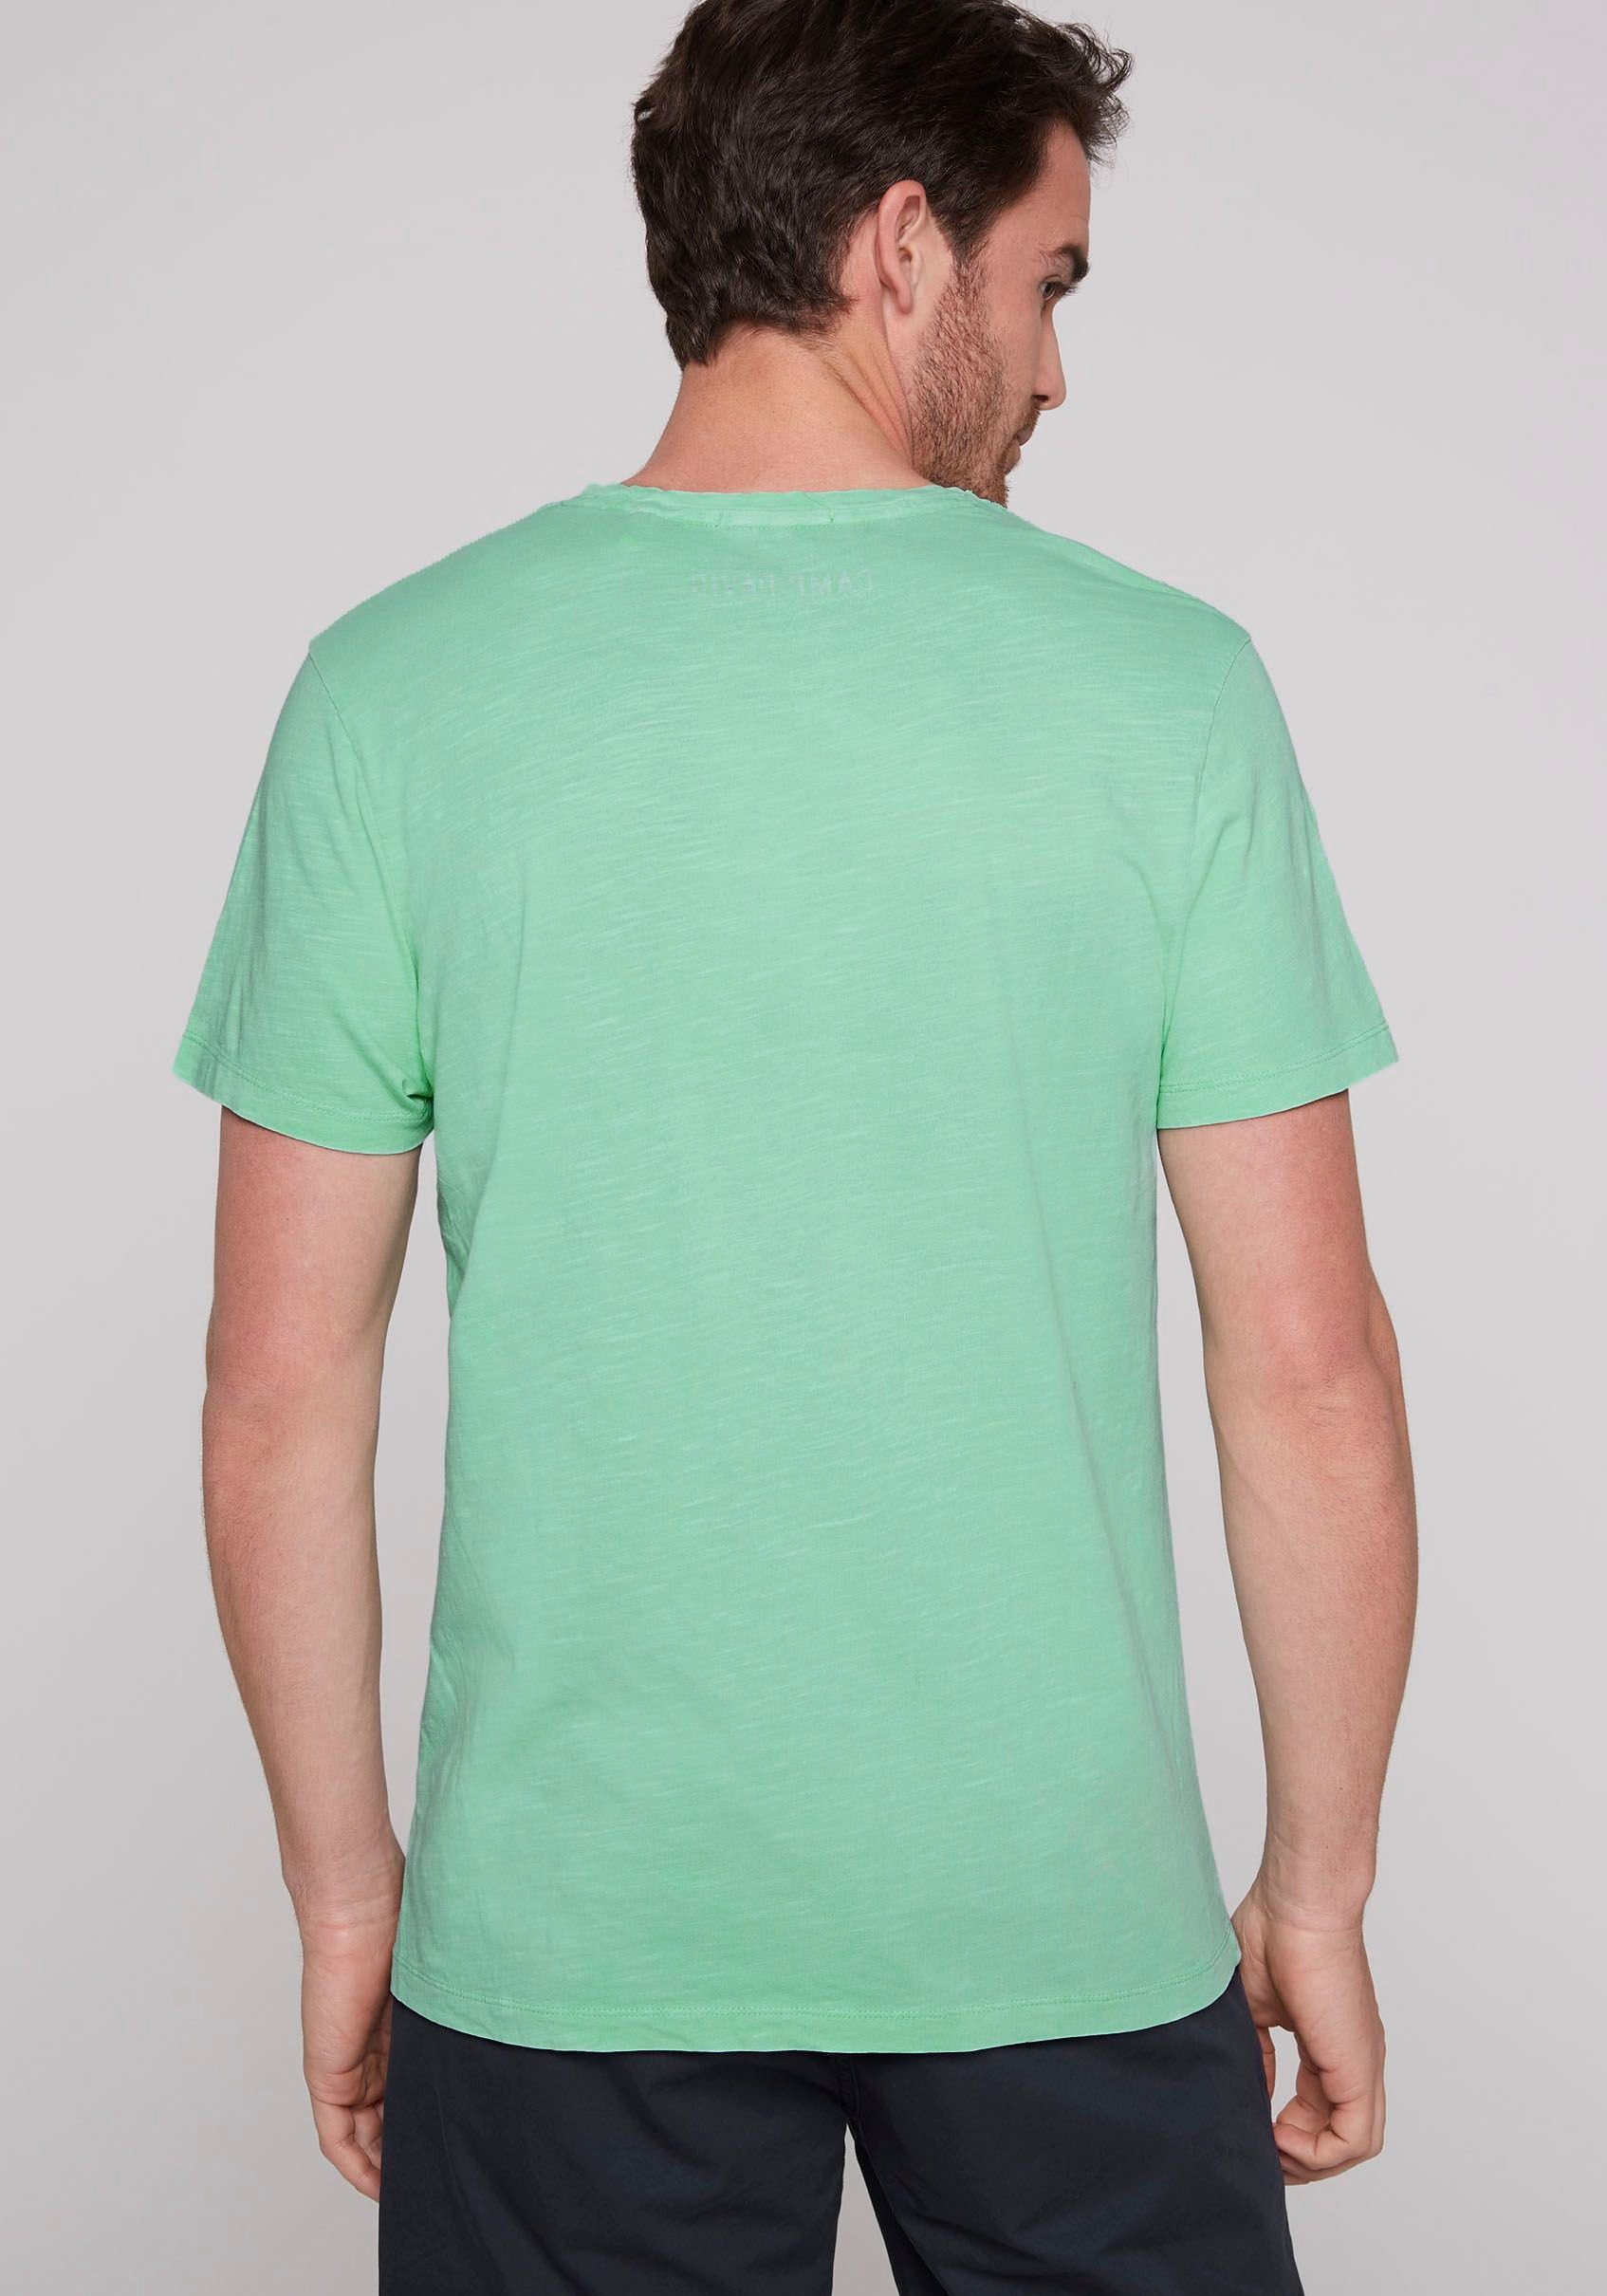 CAMP DAVID T-Shirt mit green nordic Logoprägung